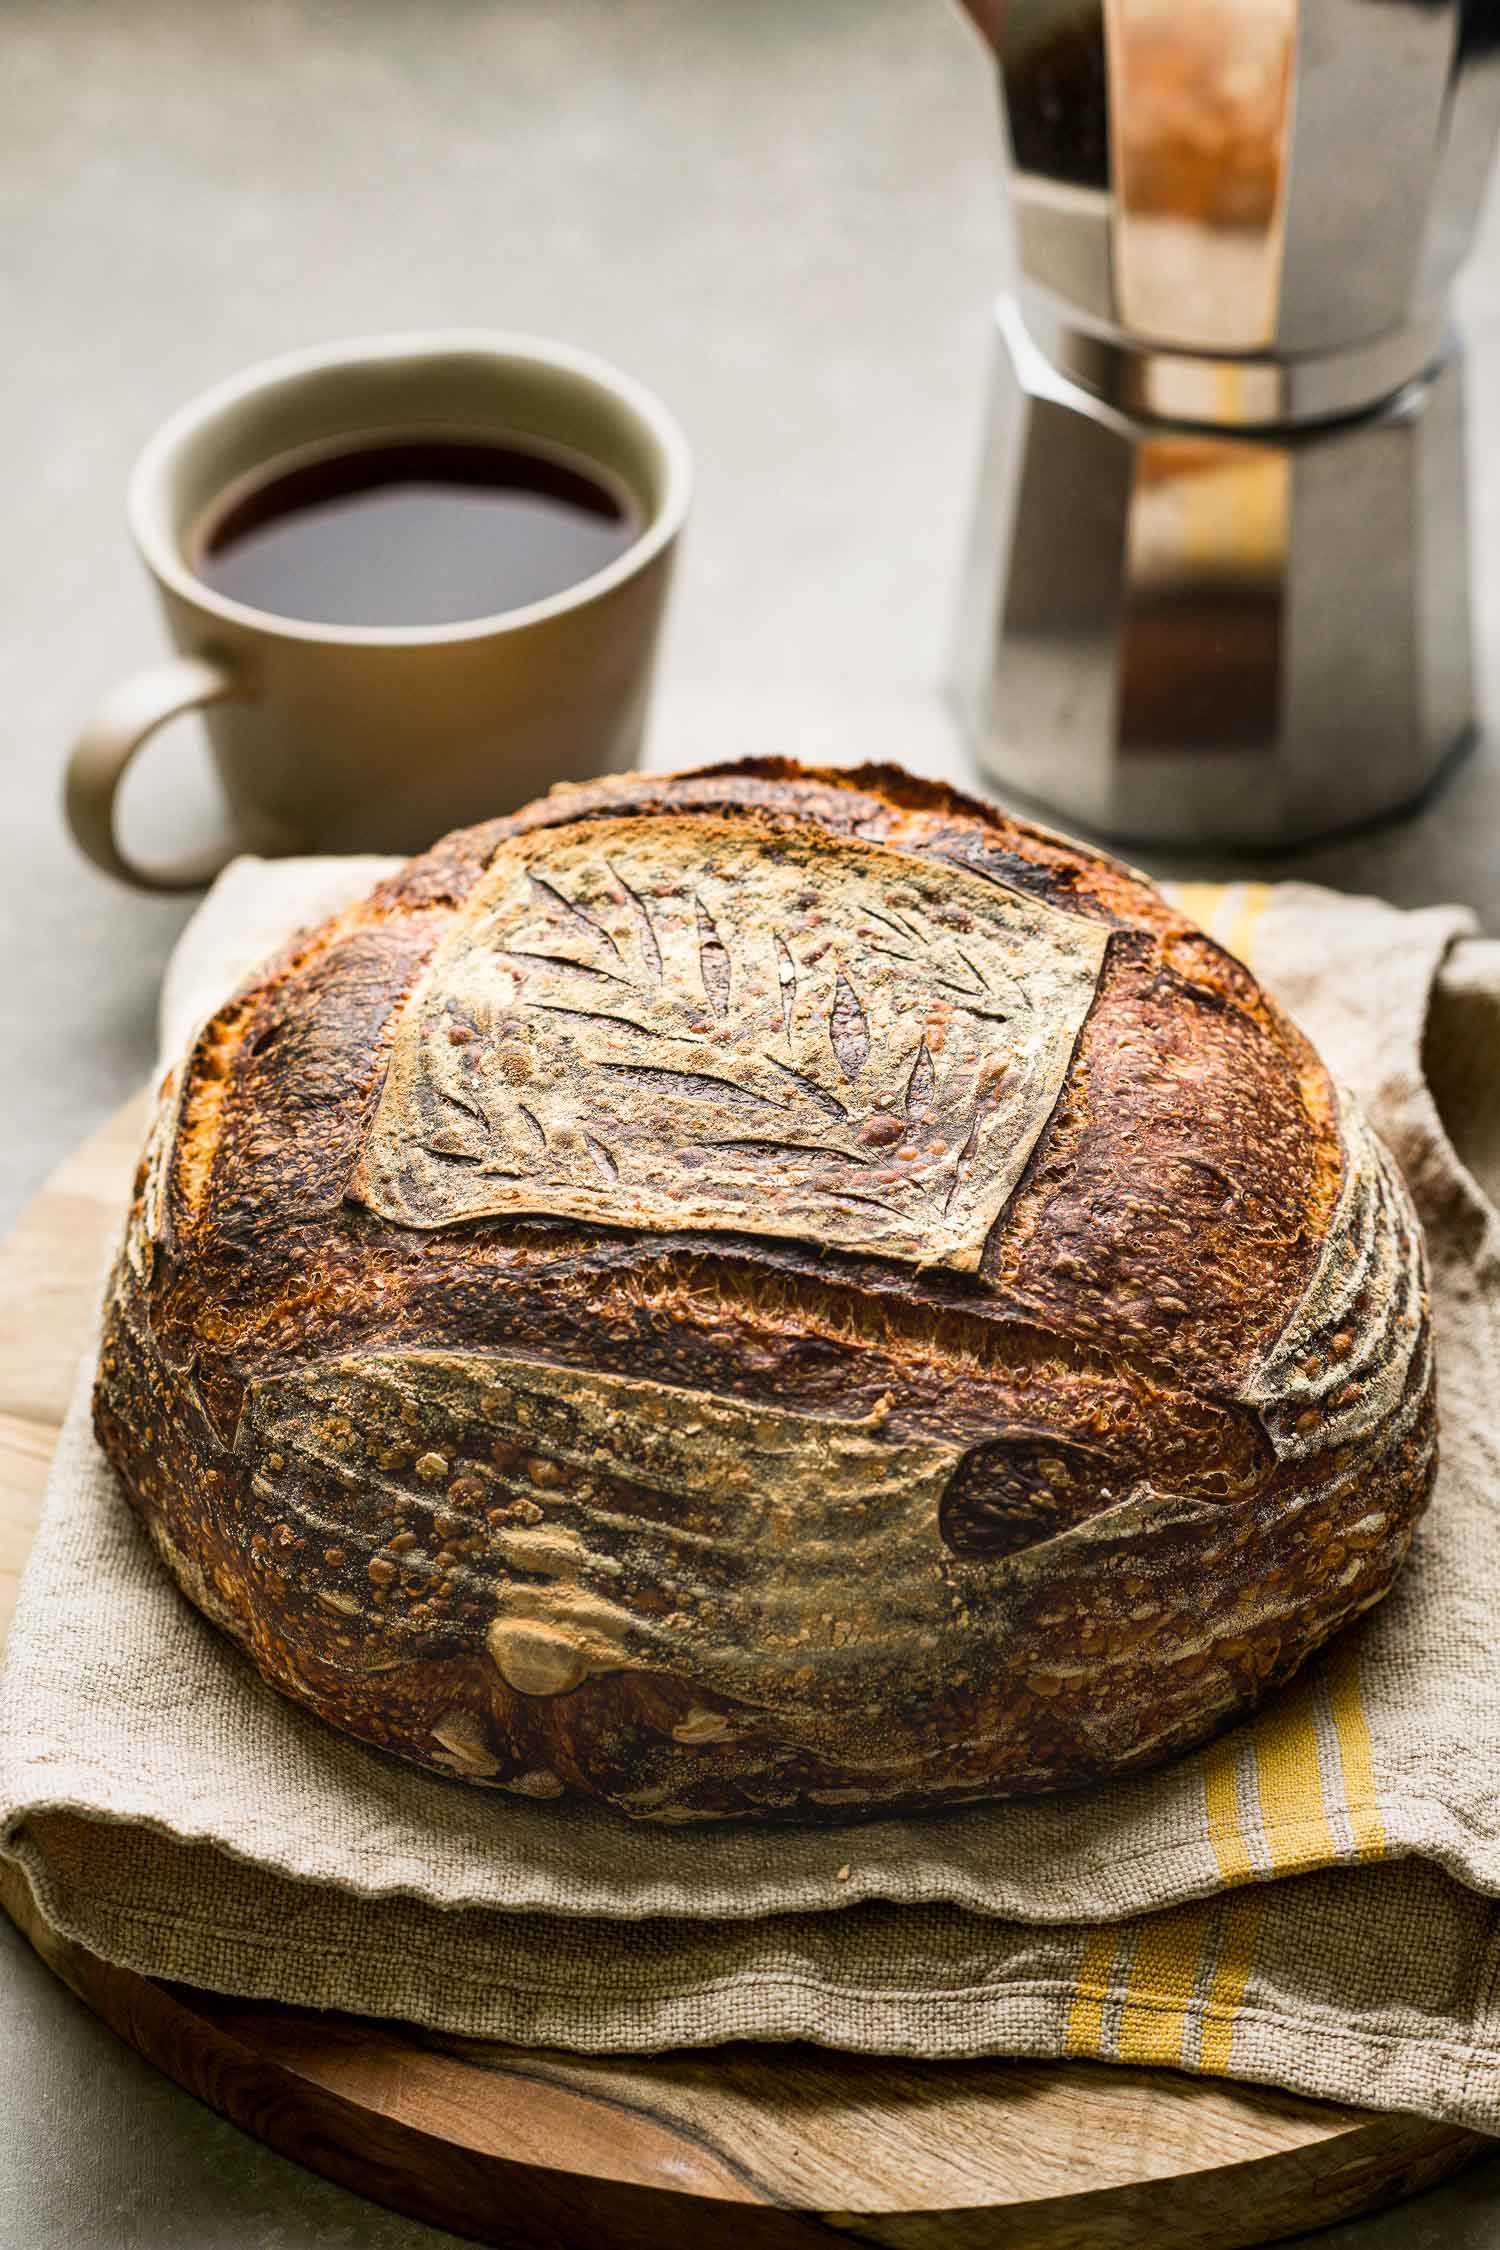 https://lemonsandanchovies.com/wp-content/uploads/2020/05/Everyday-Sourdough-Bread.jpg